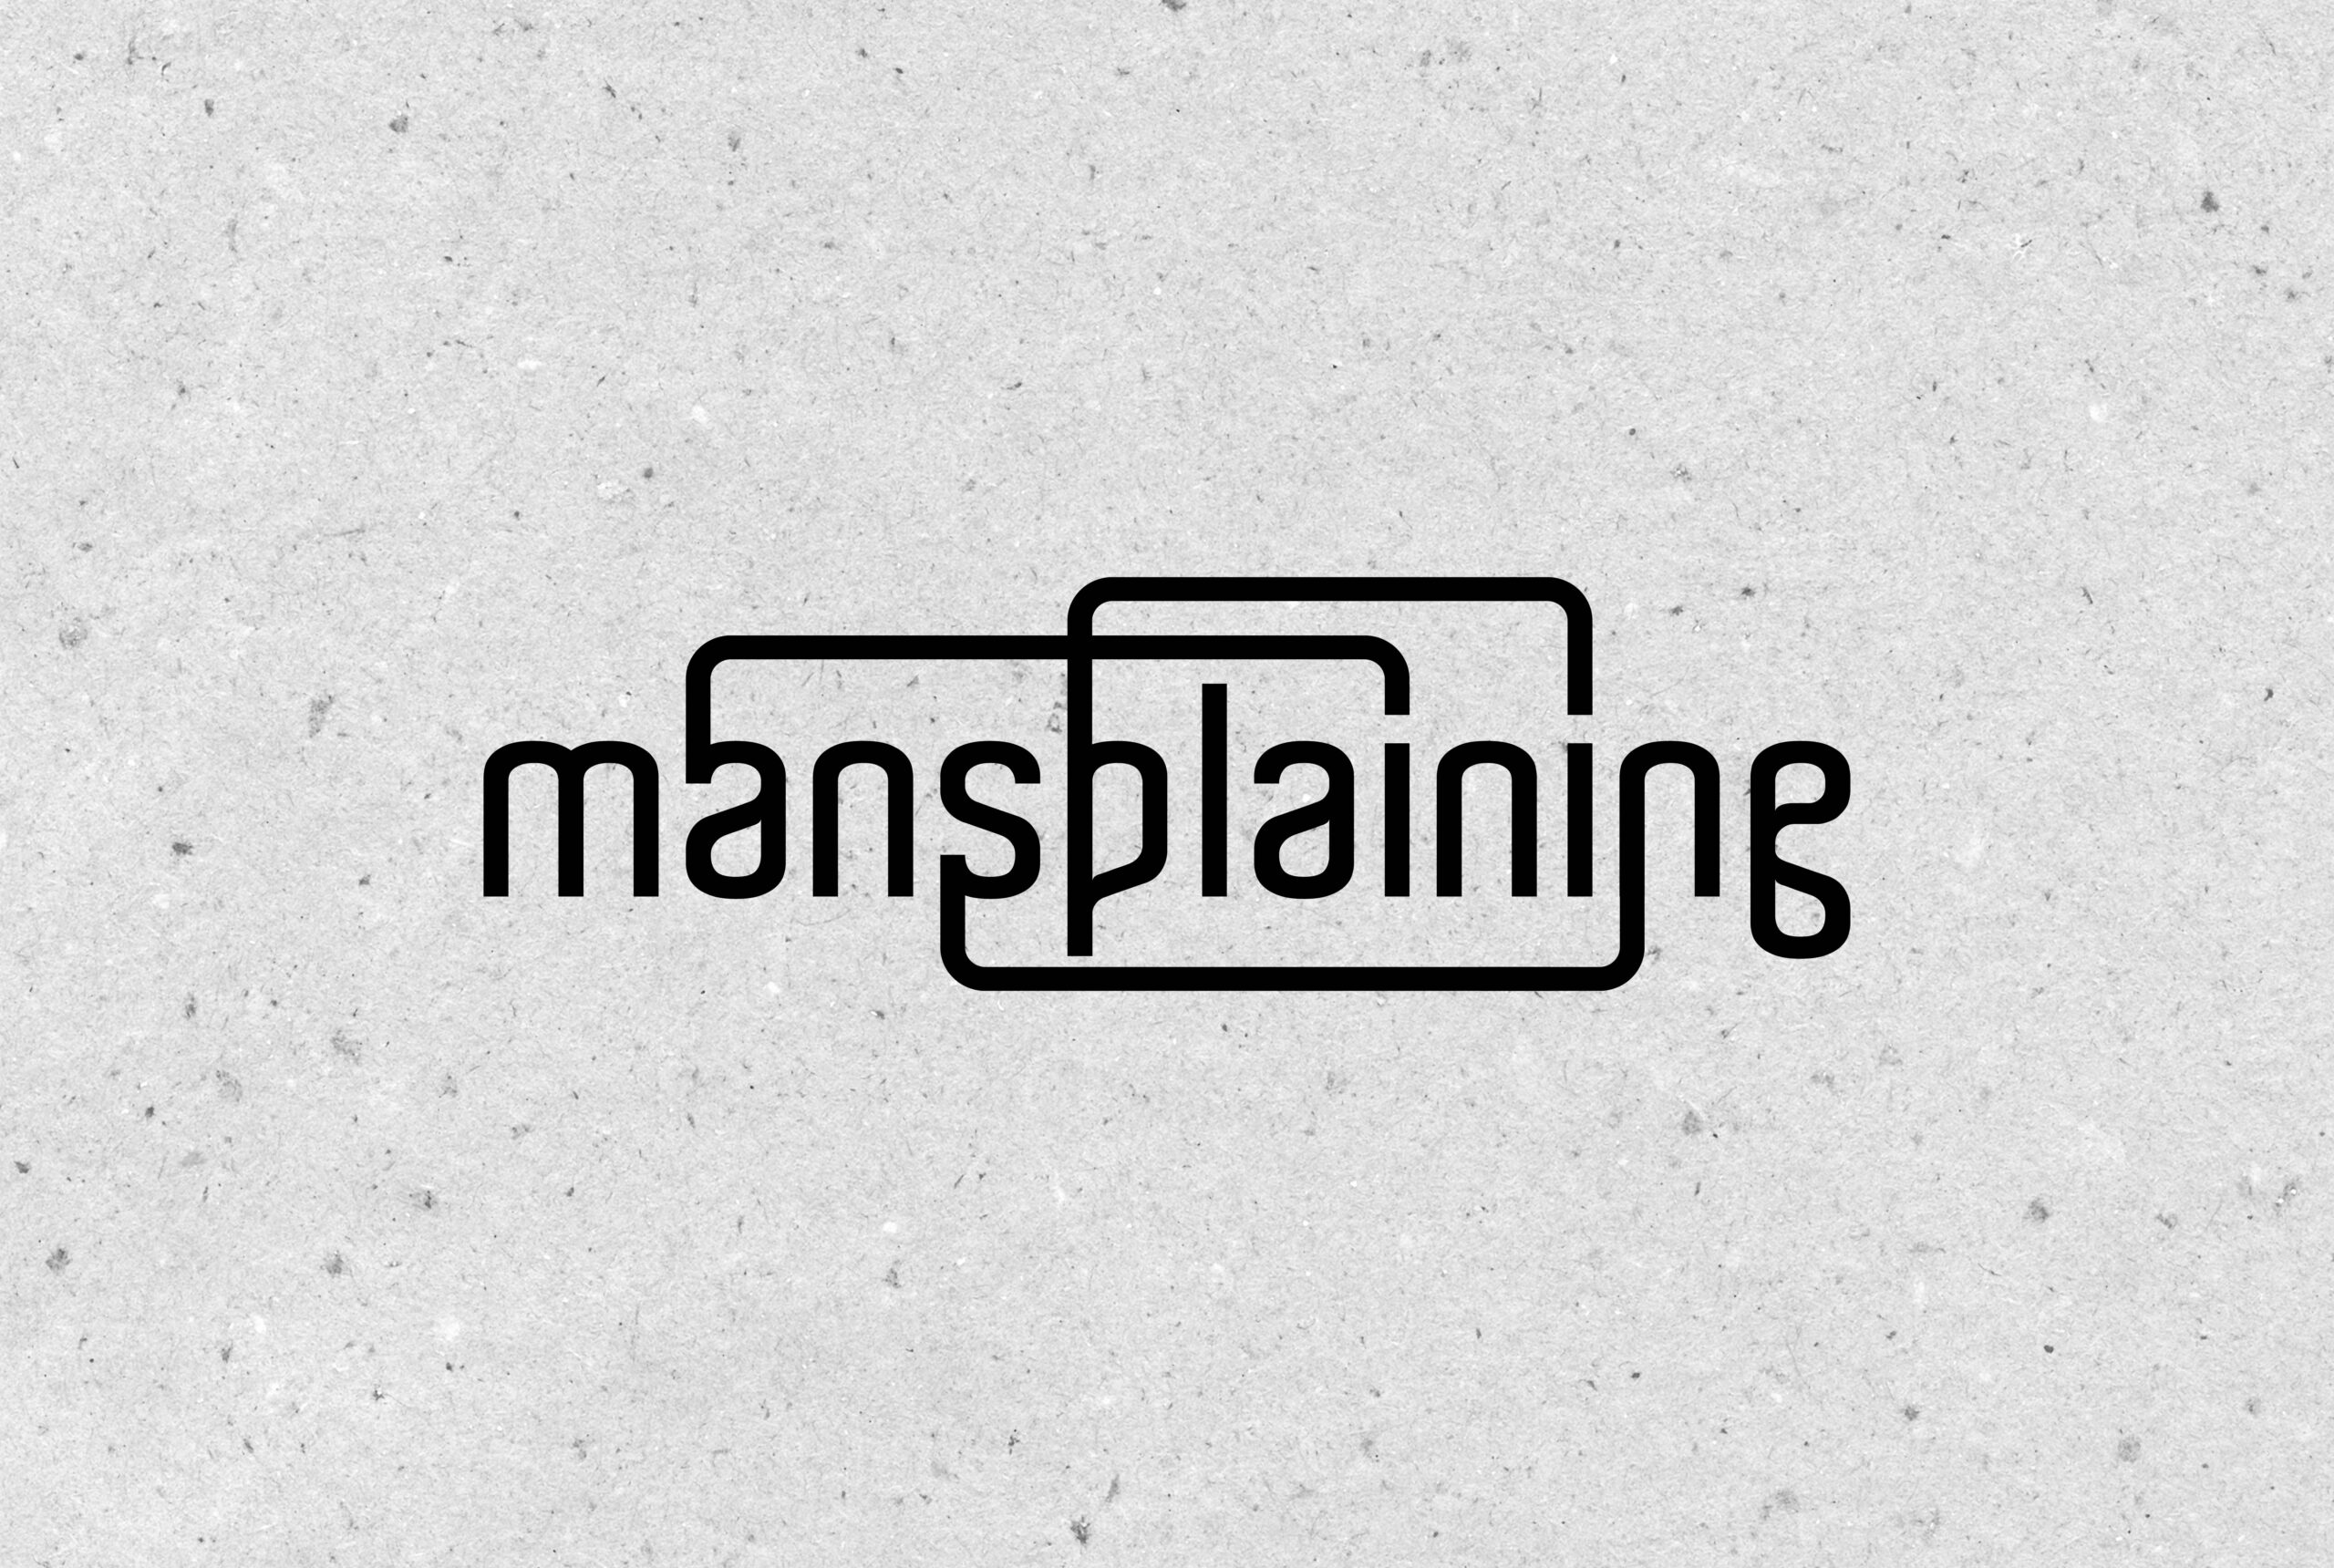 Mansplaining